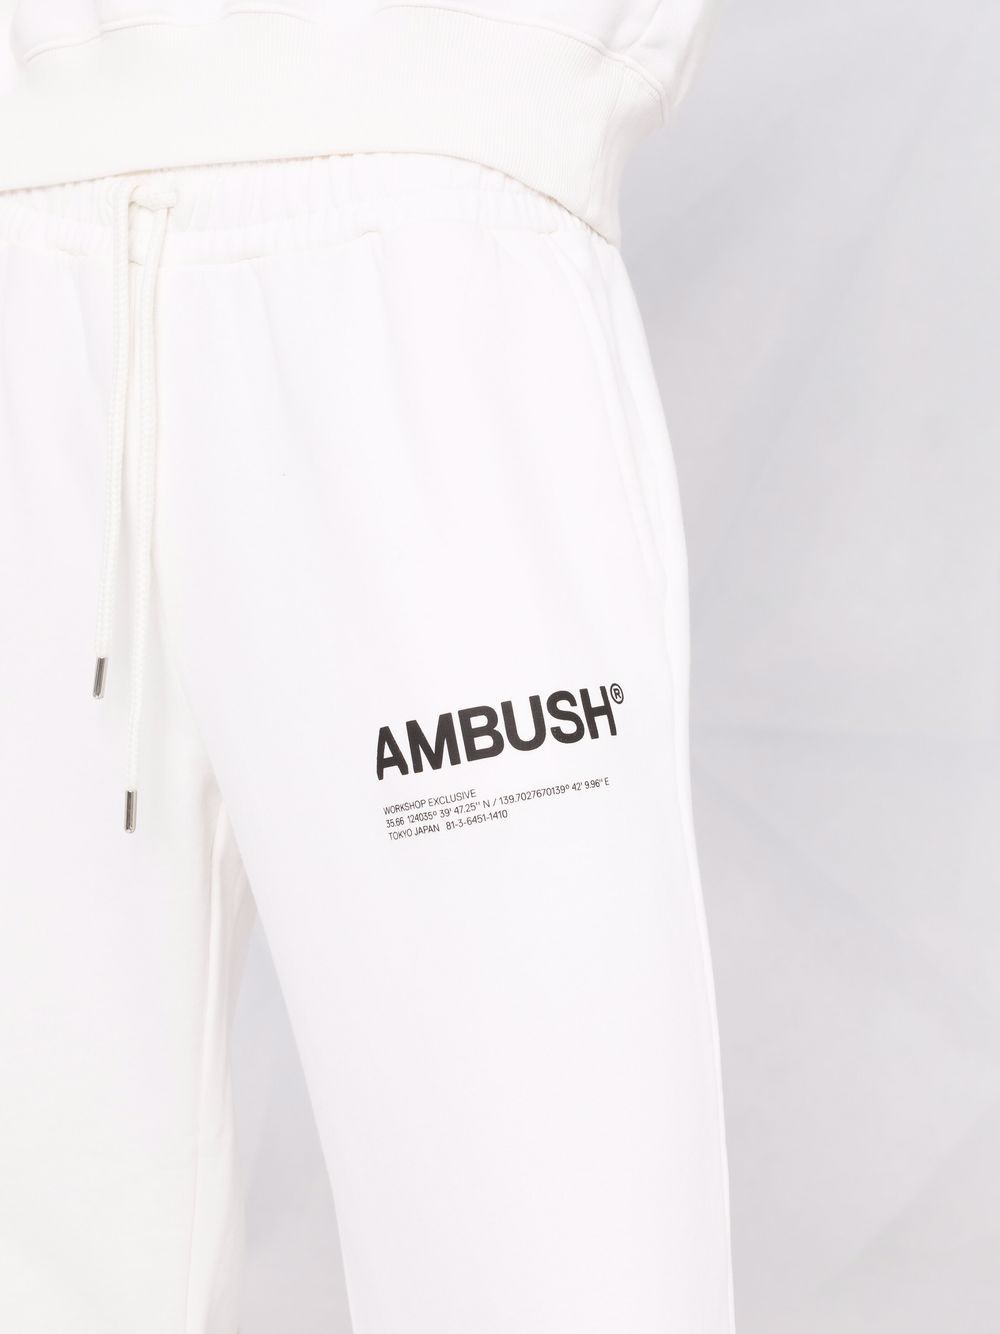 фото Ambush спортивные брюки с логотипом